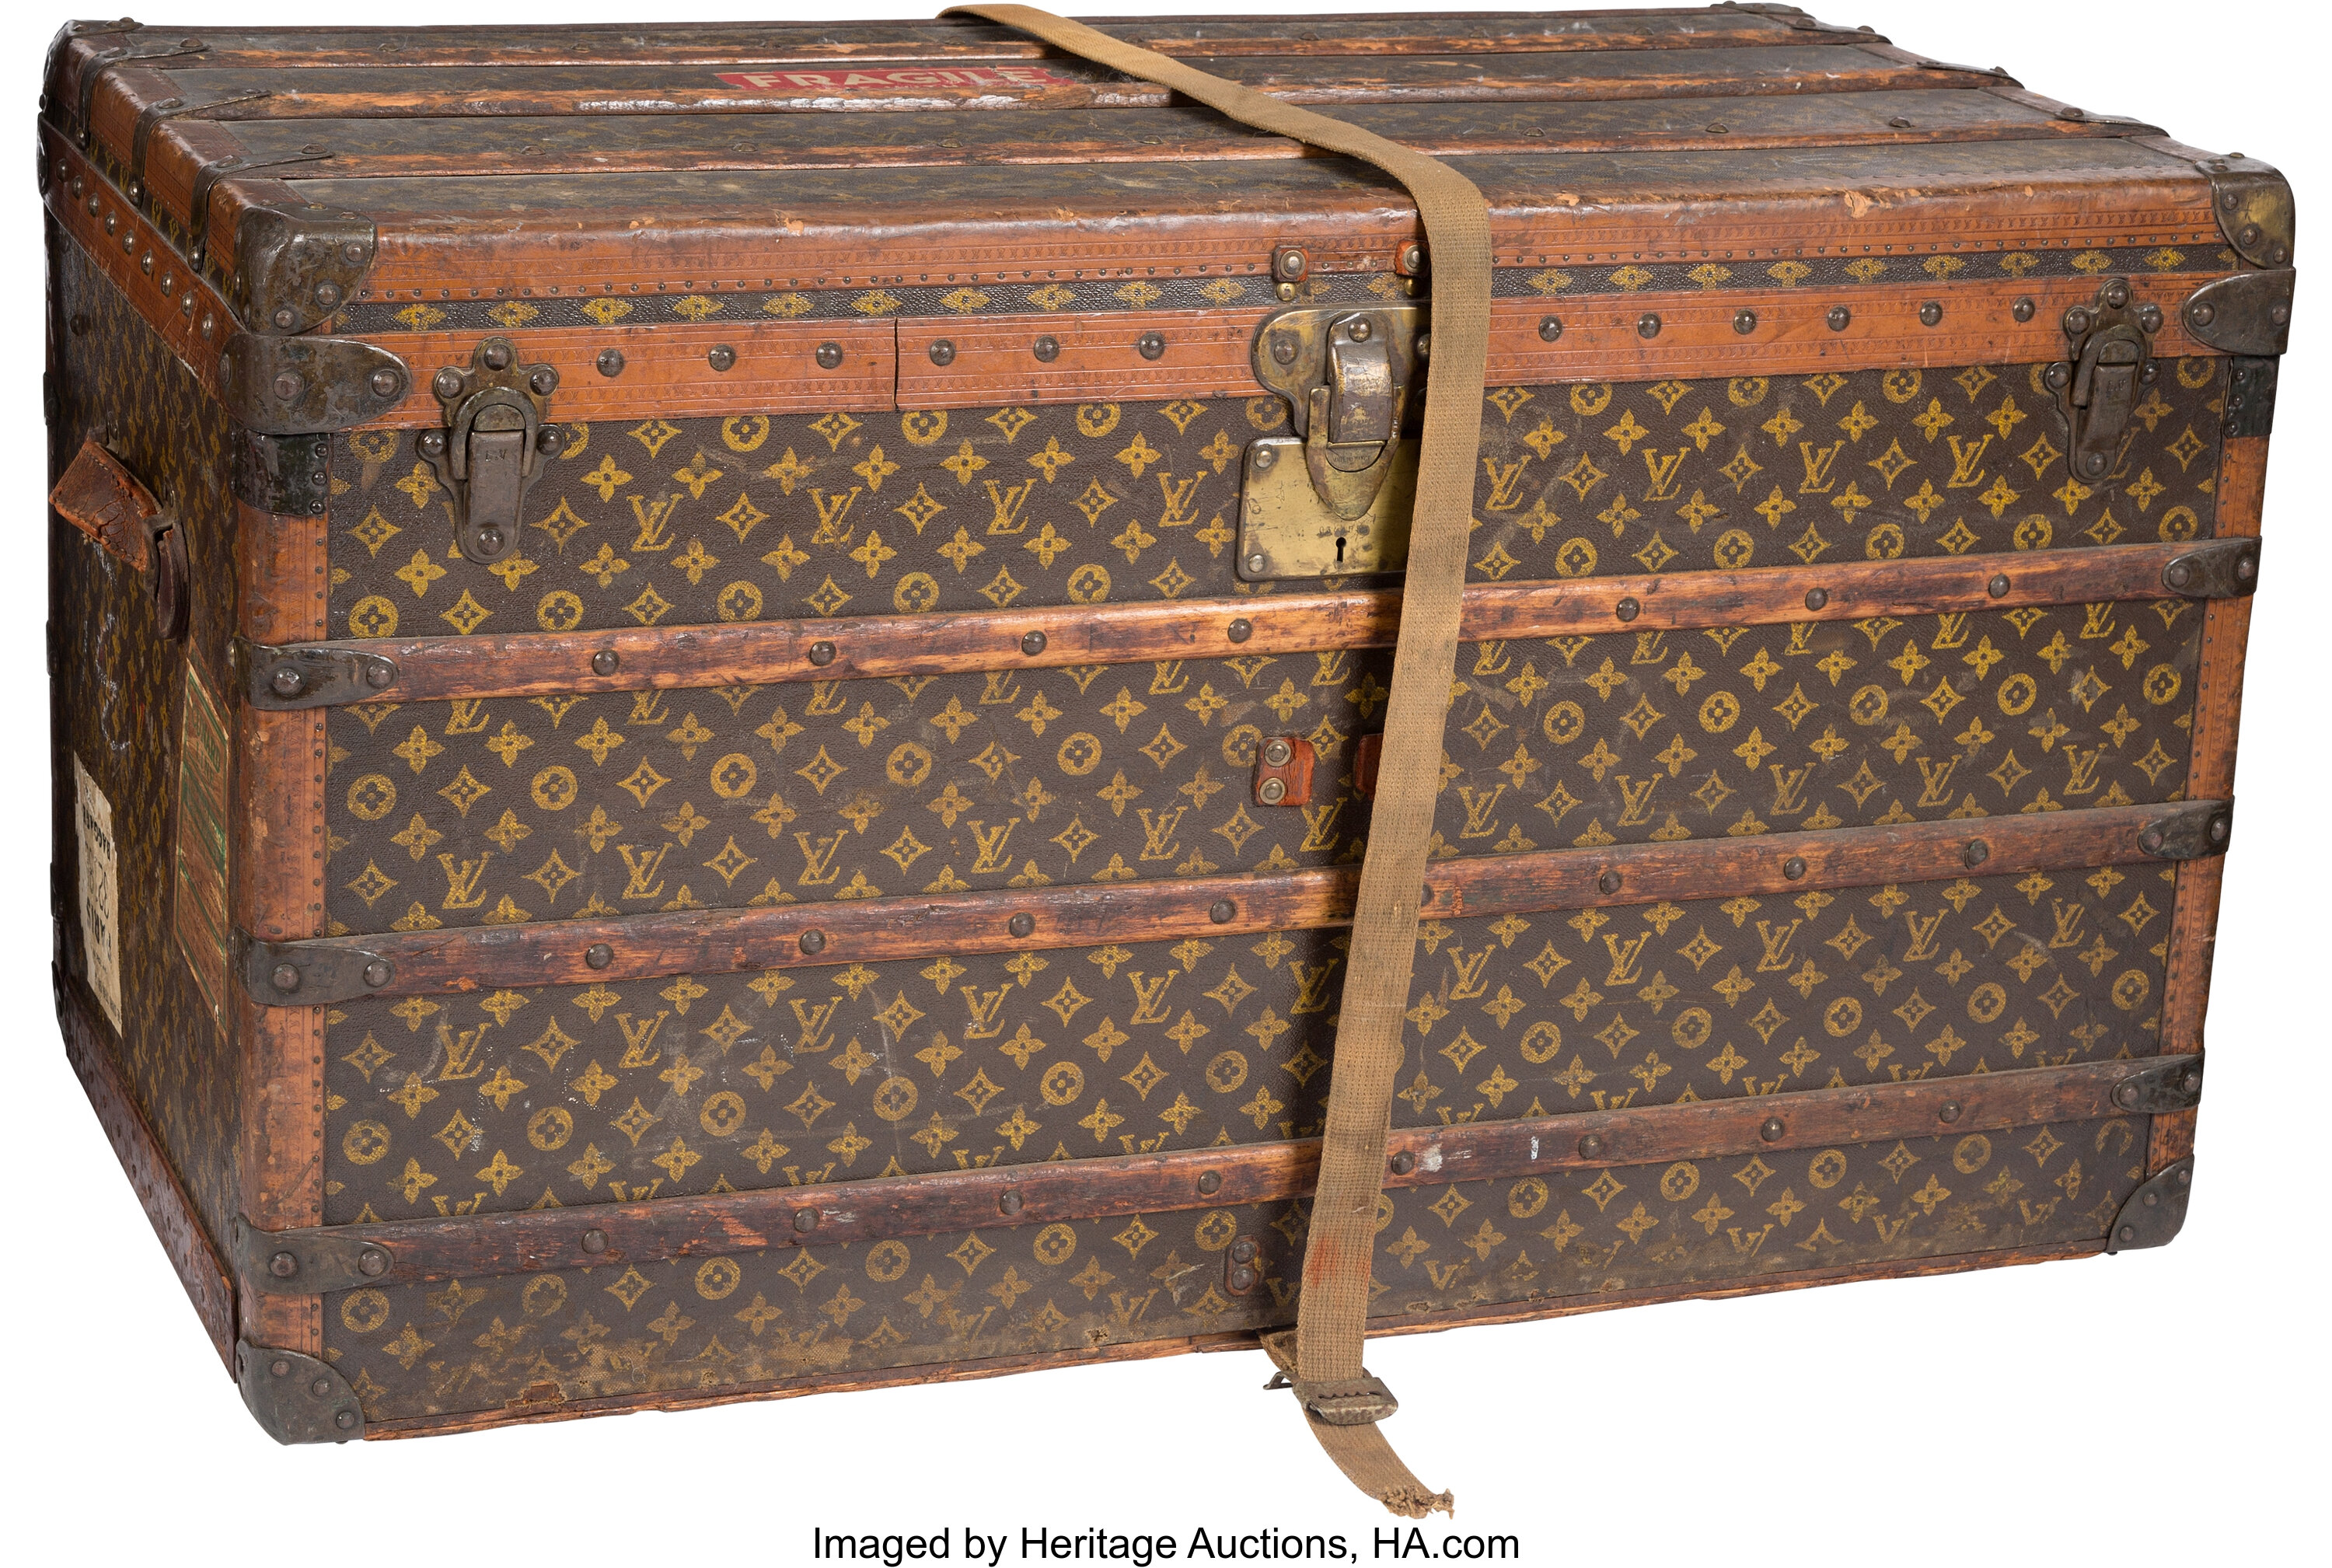 Sold at Auction: Vintage Louis Vuitton monogram travel bag steamer